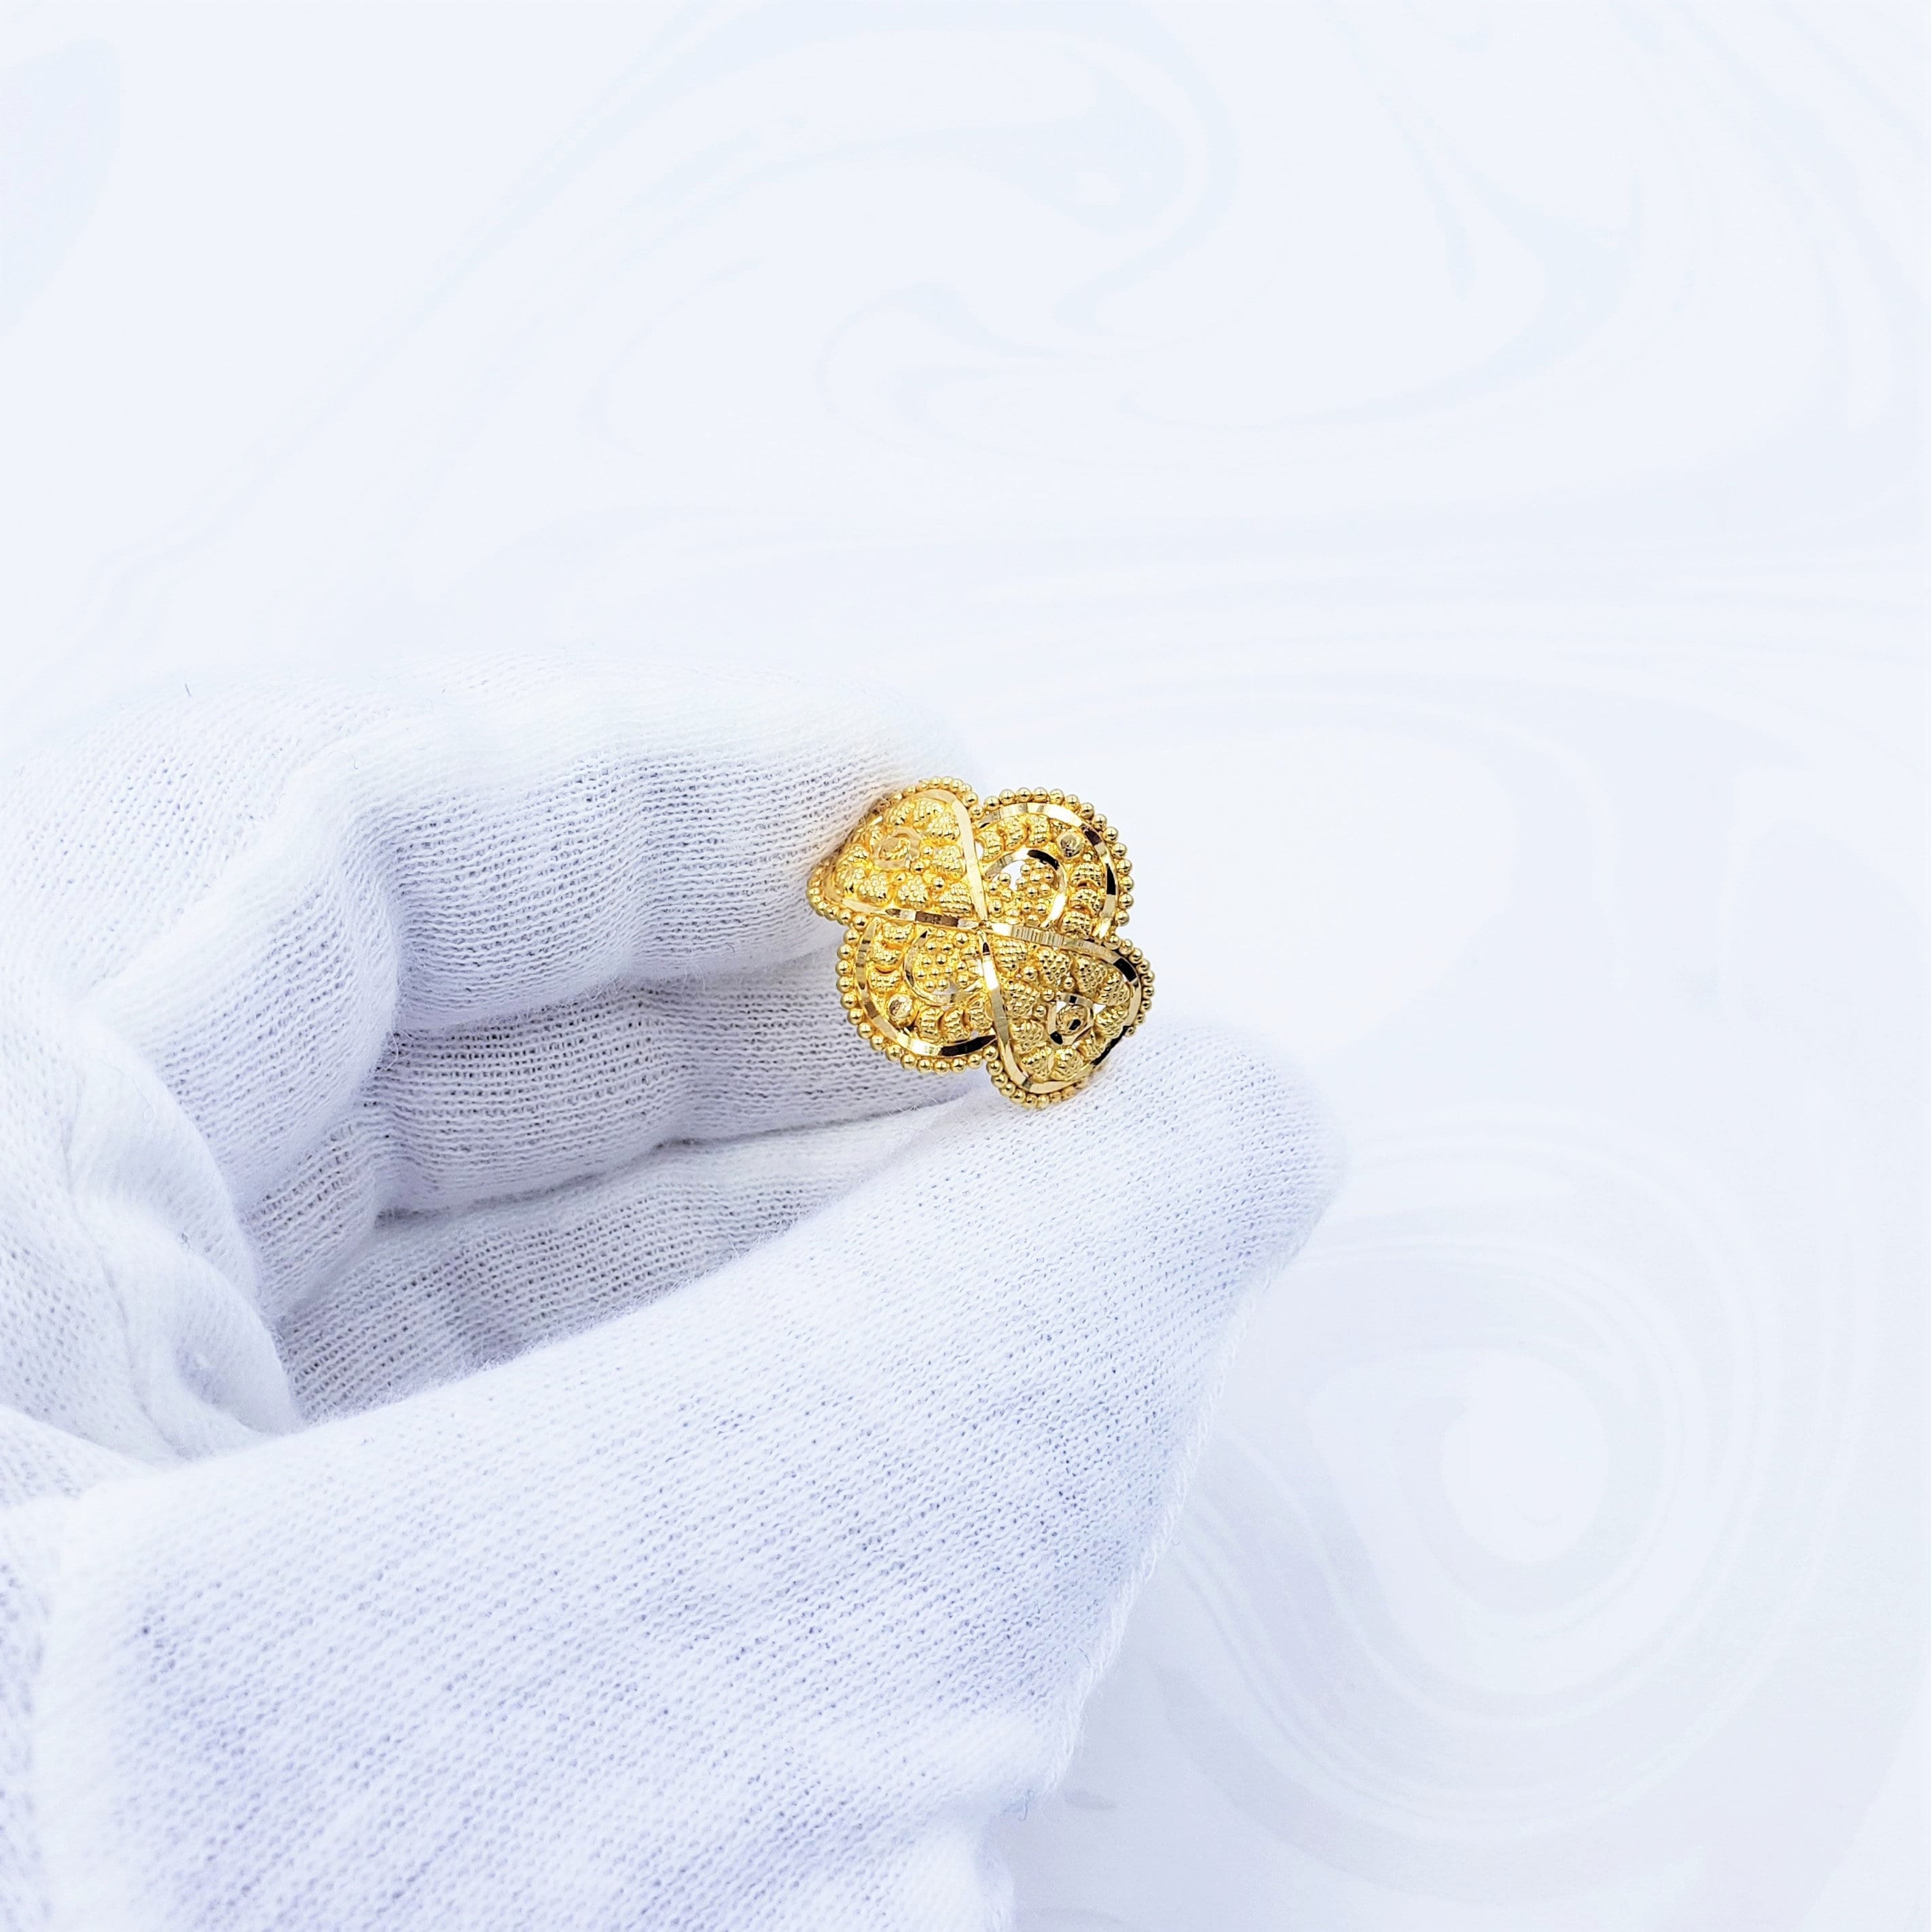 GOLDSHINE 22K Solid Gold RING US 7.25 Female Genuine | Etsy